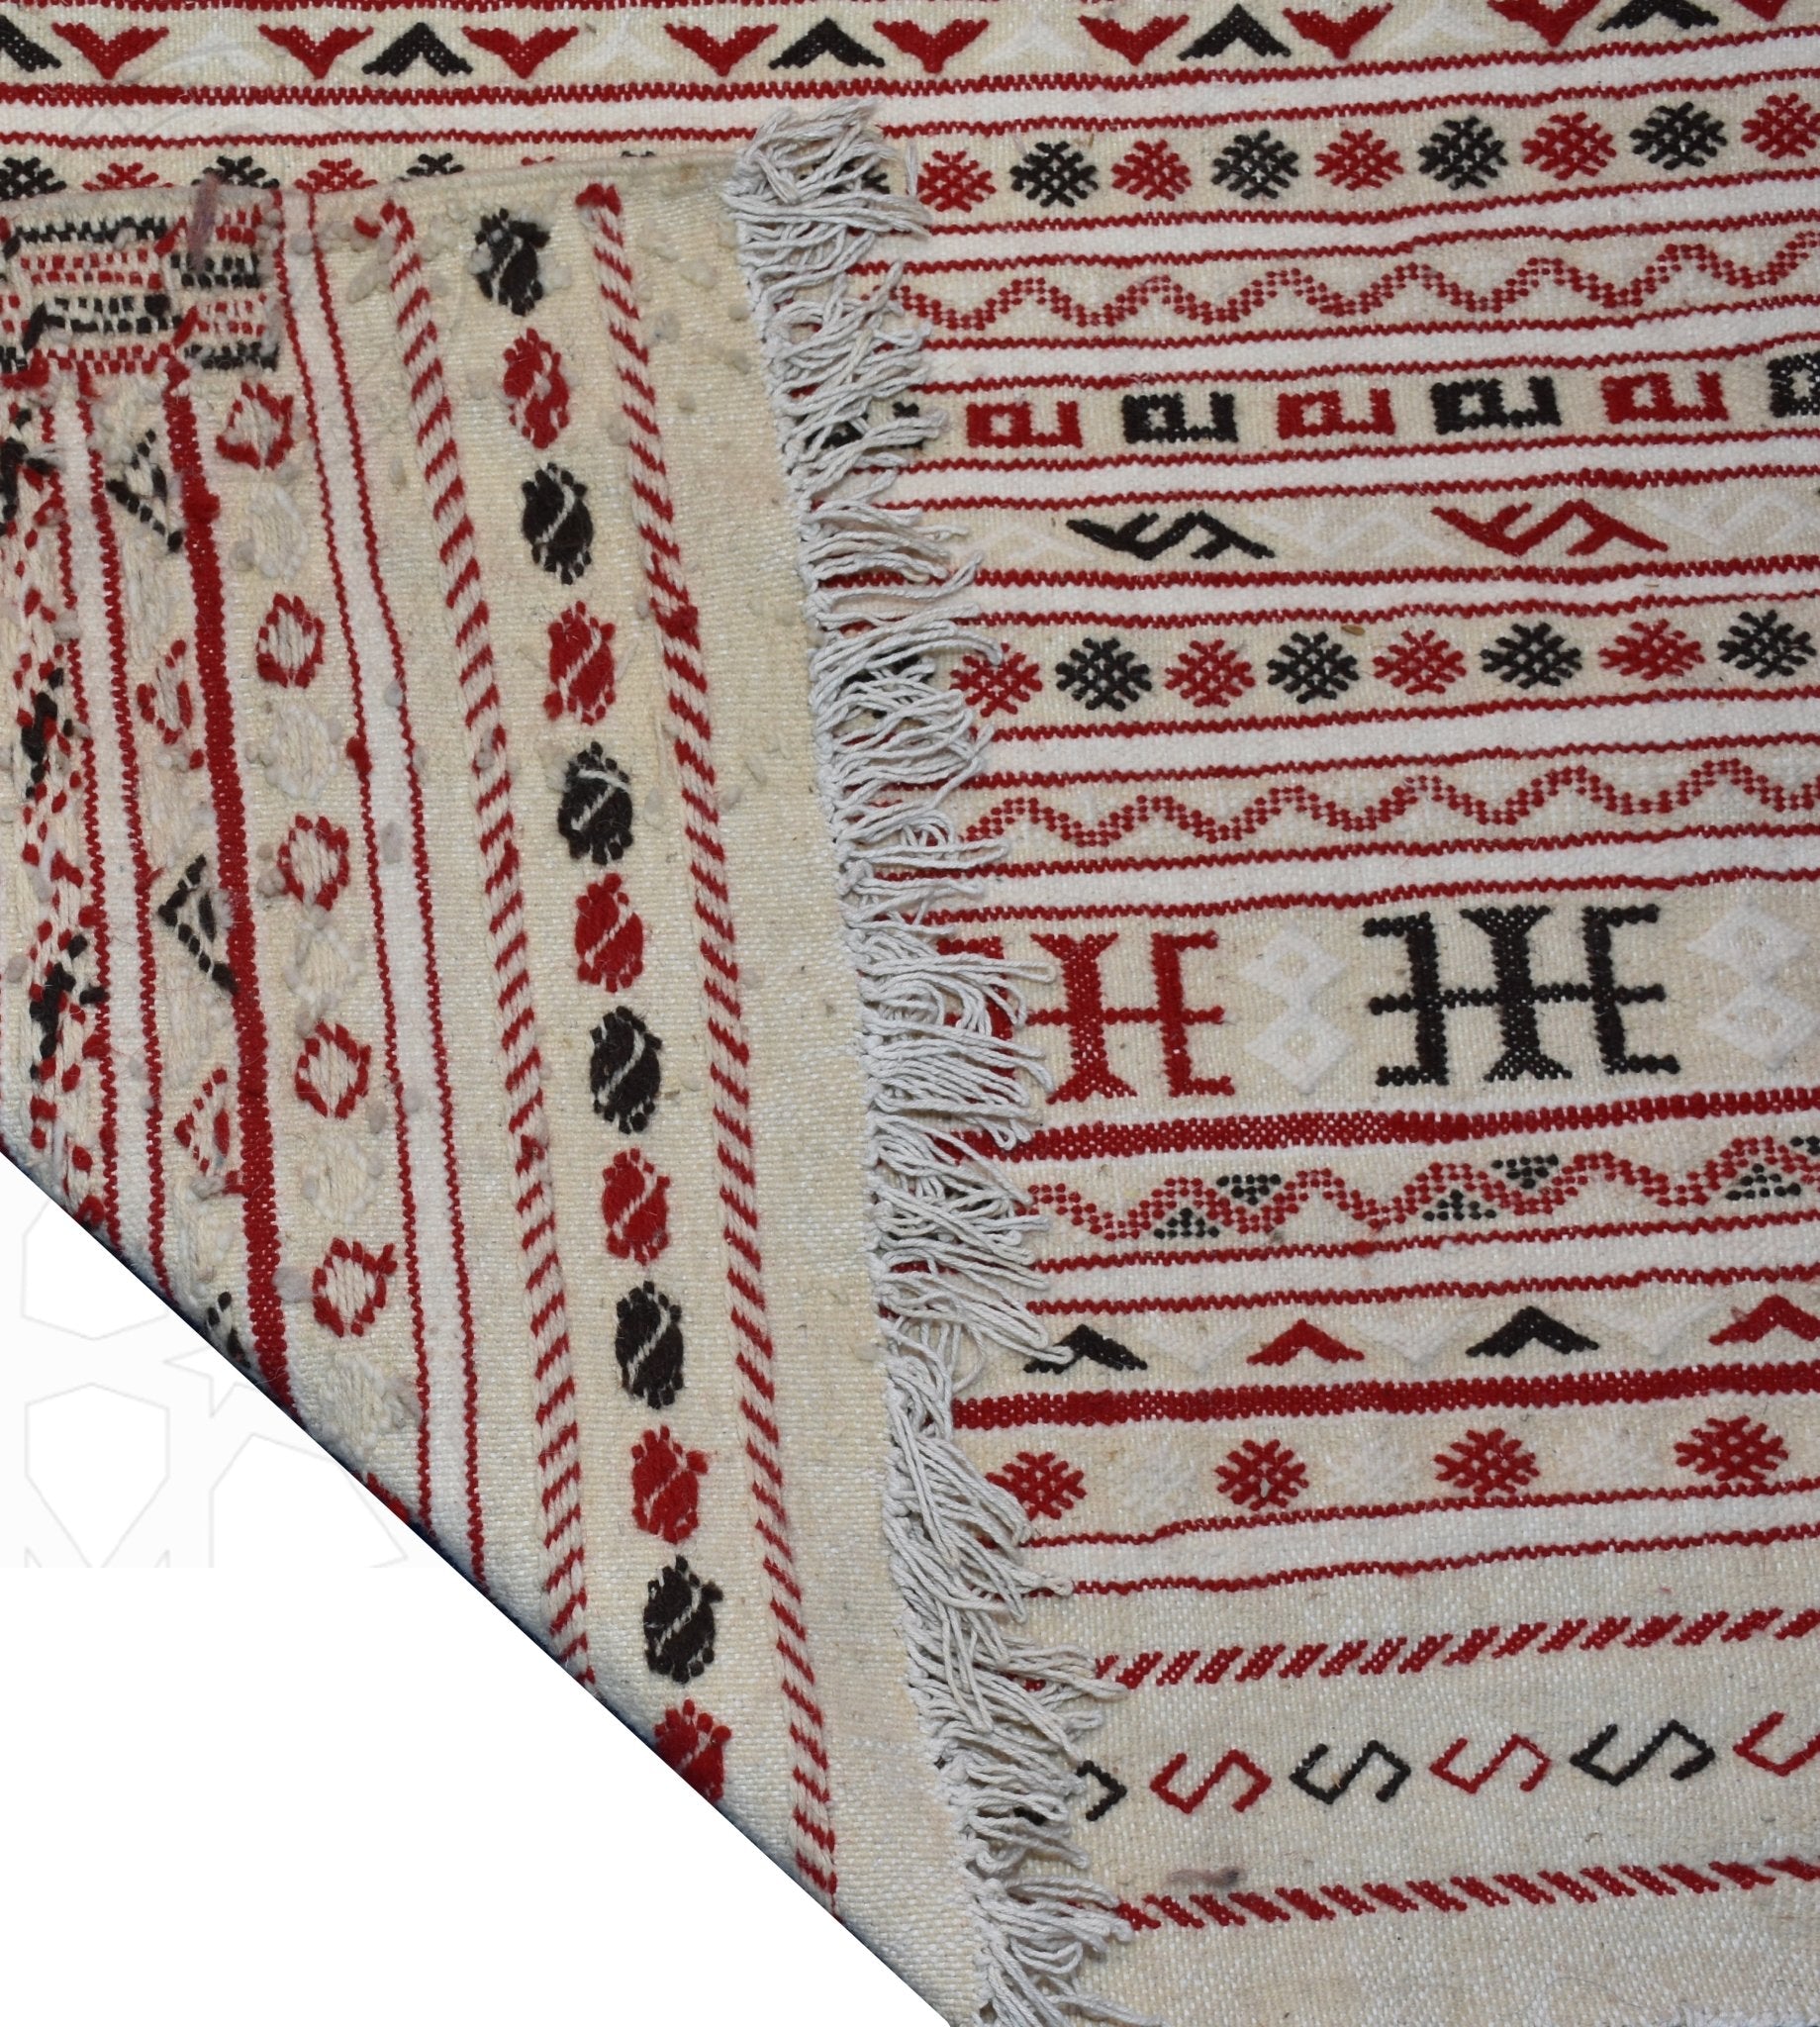 Flatweave kilim hanbal Moroccan rug - 4.93 x 6.57 ft / 150 x 200 cm - Berbers Market